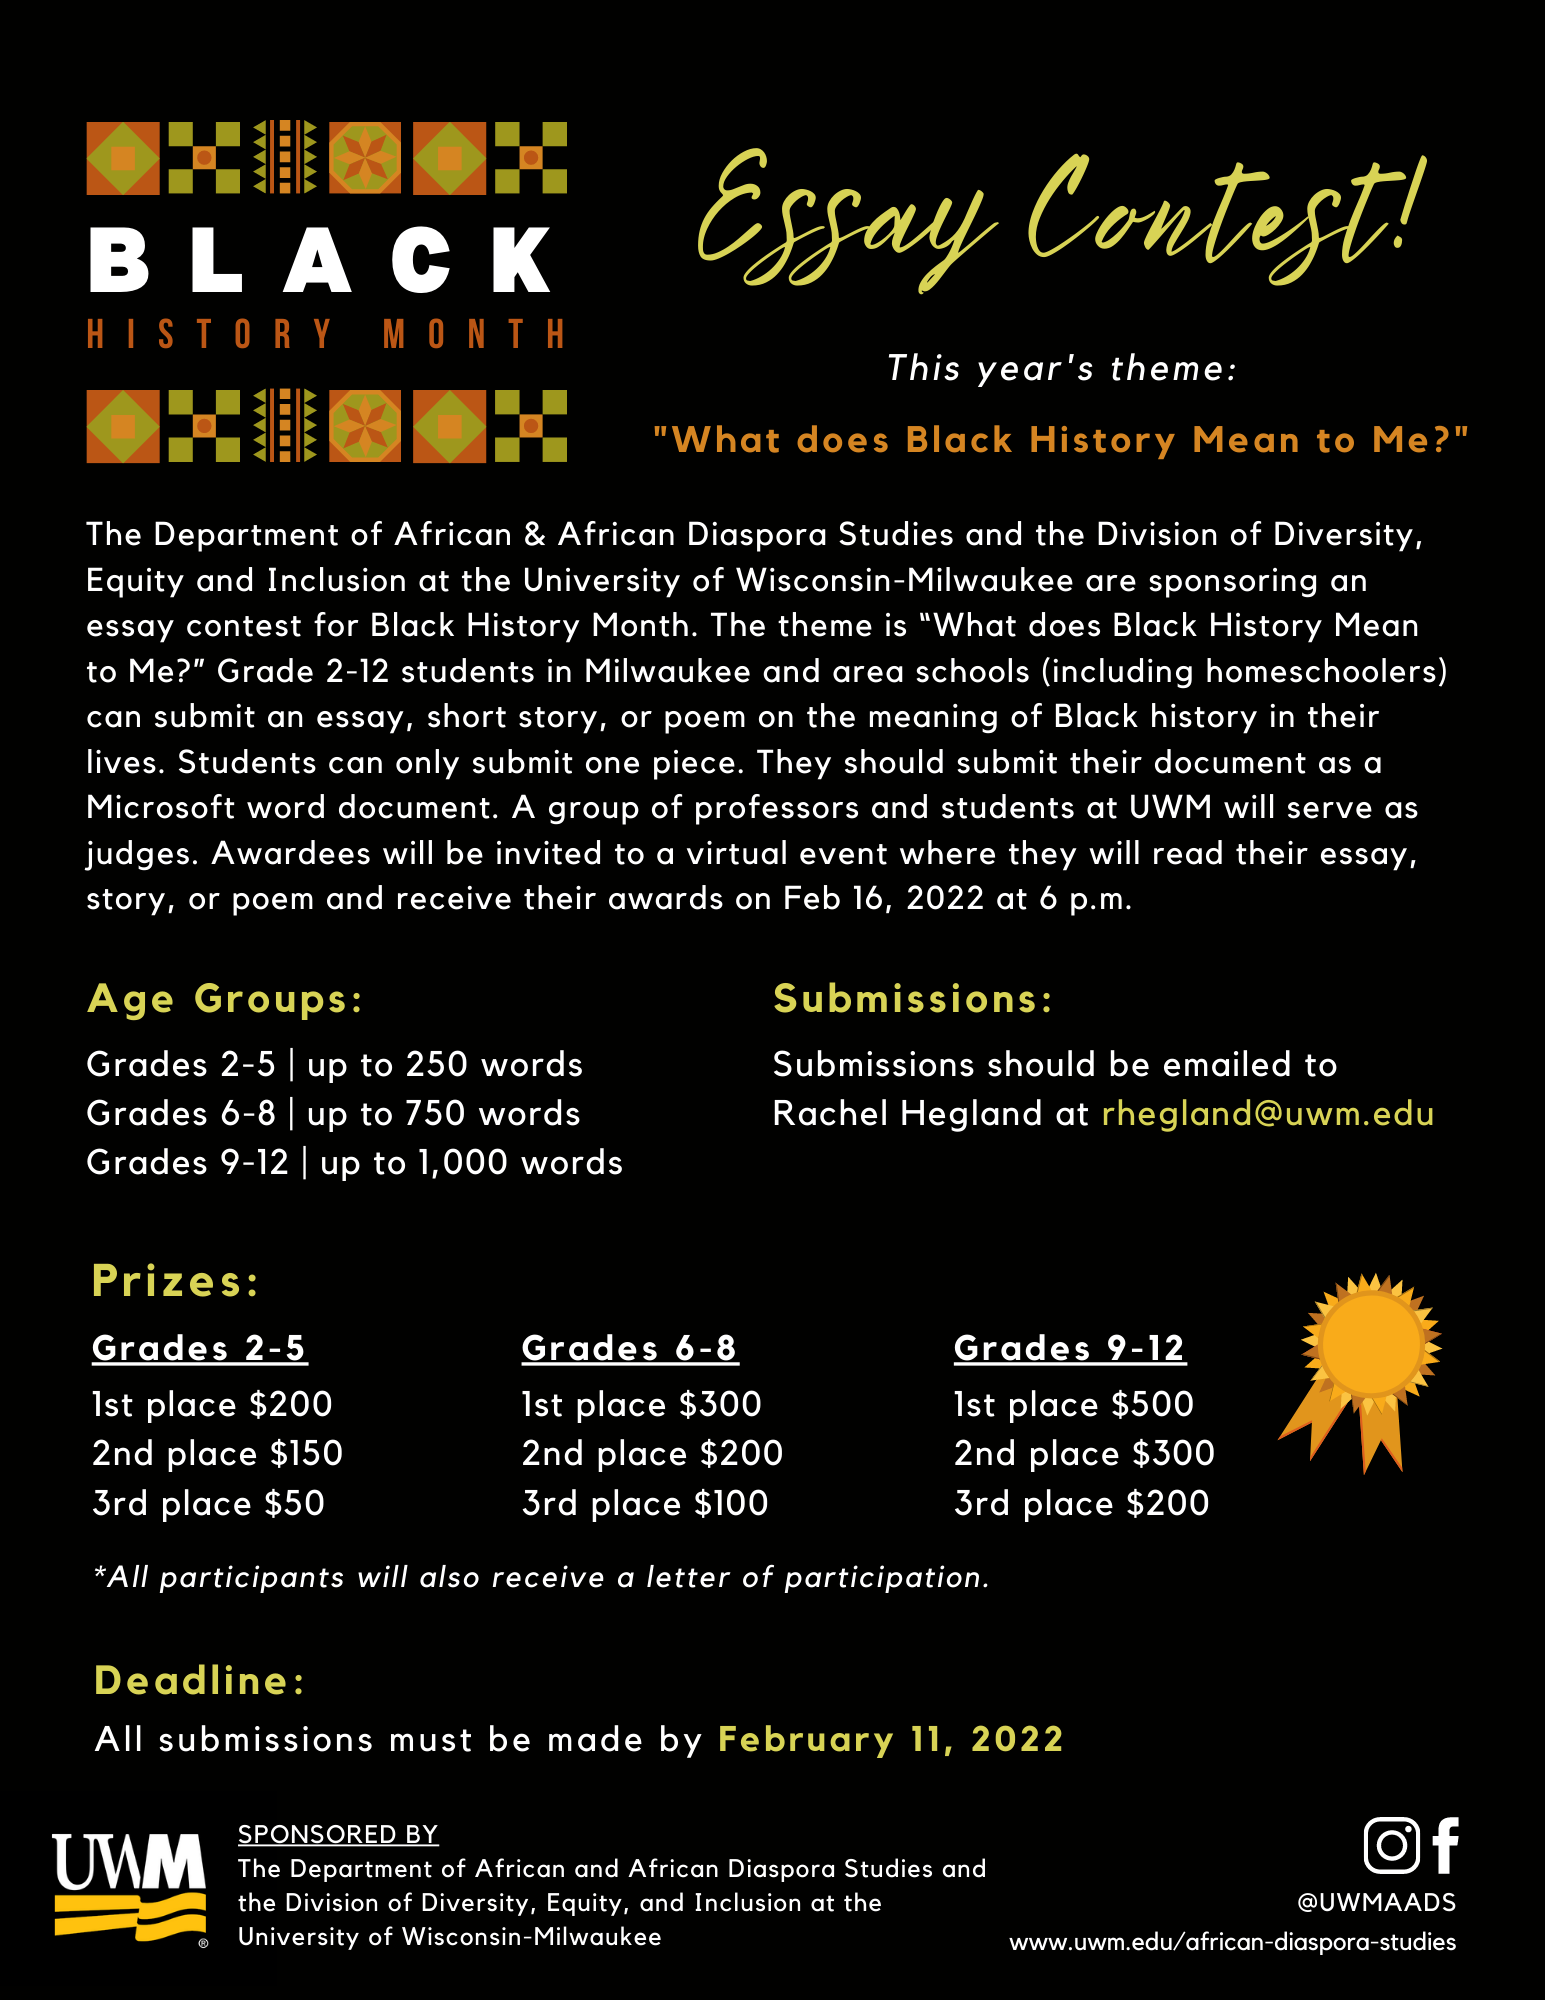 florida black history month essay contest 2020 winners